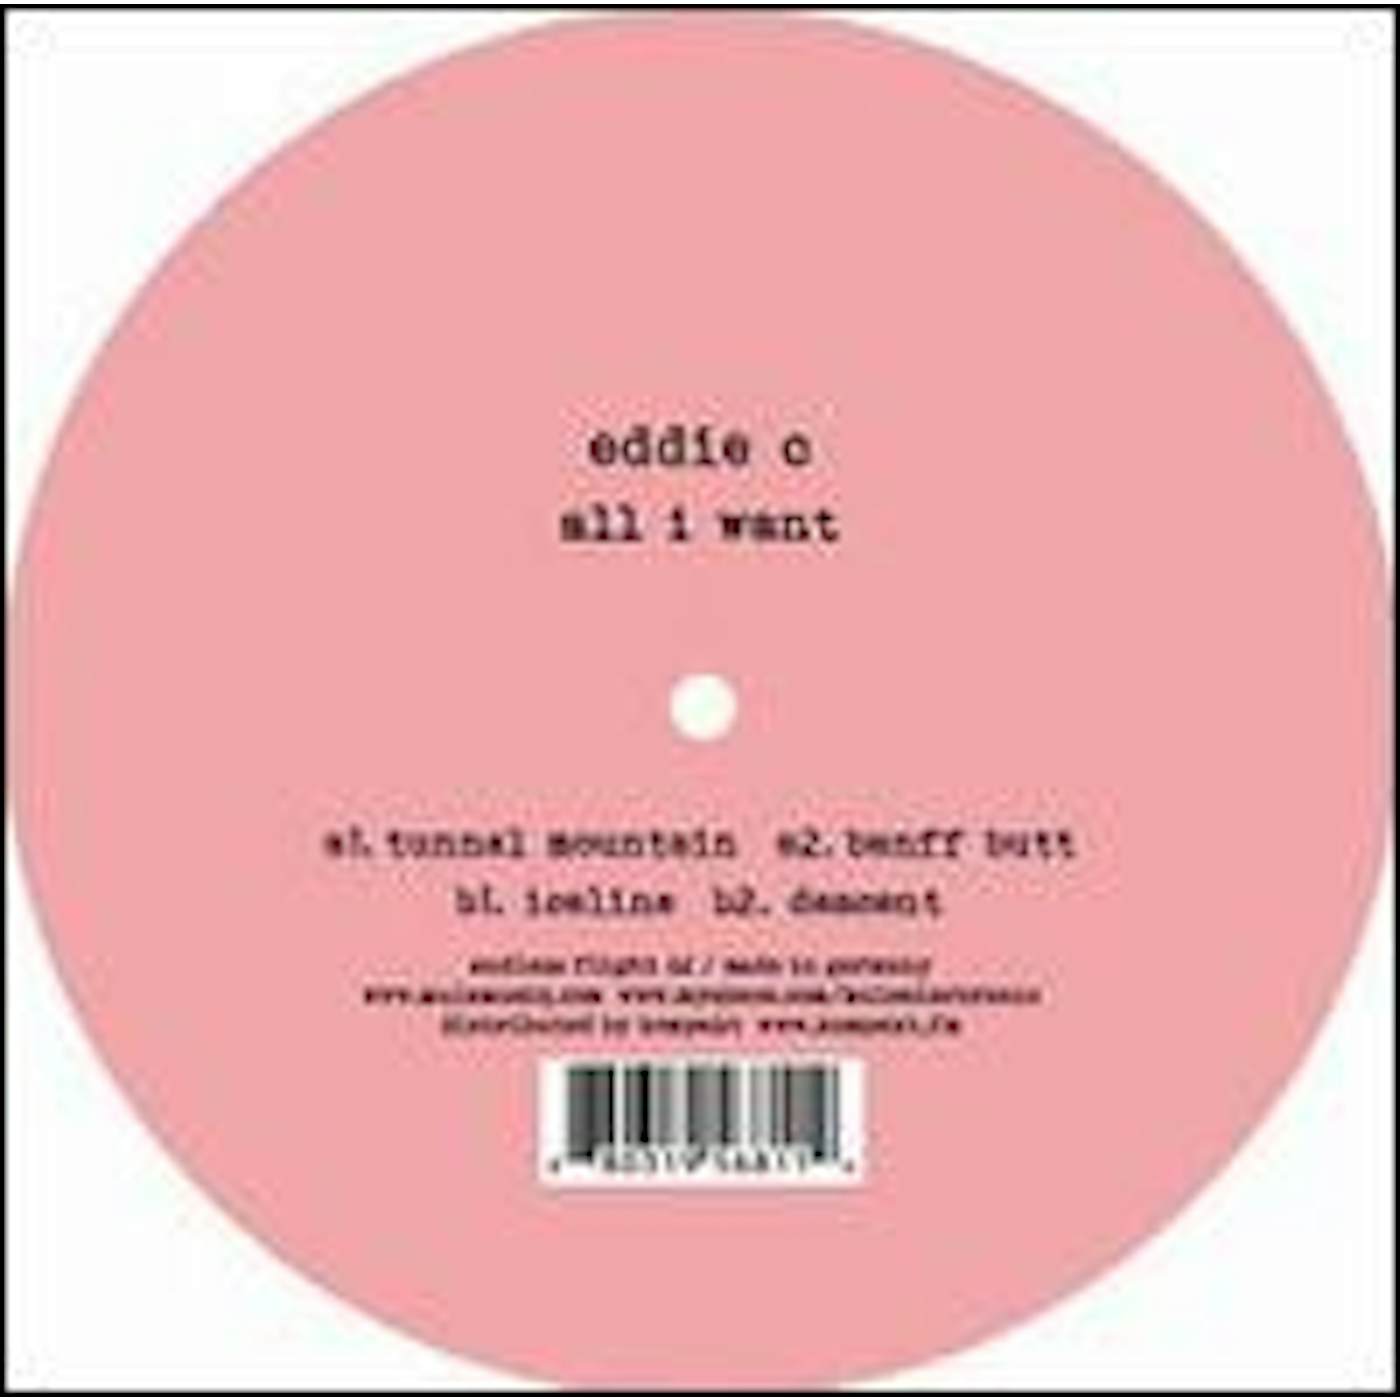 Eddie C All I Want Vinyl Record